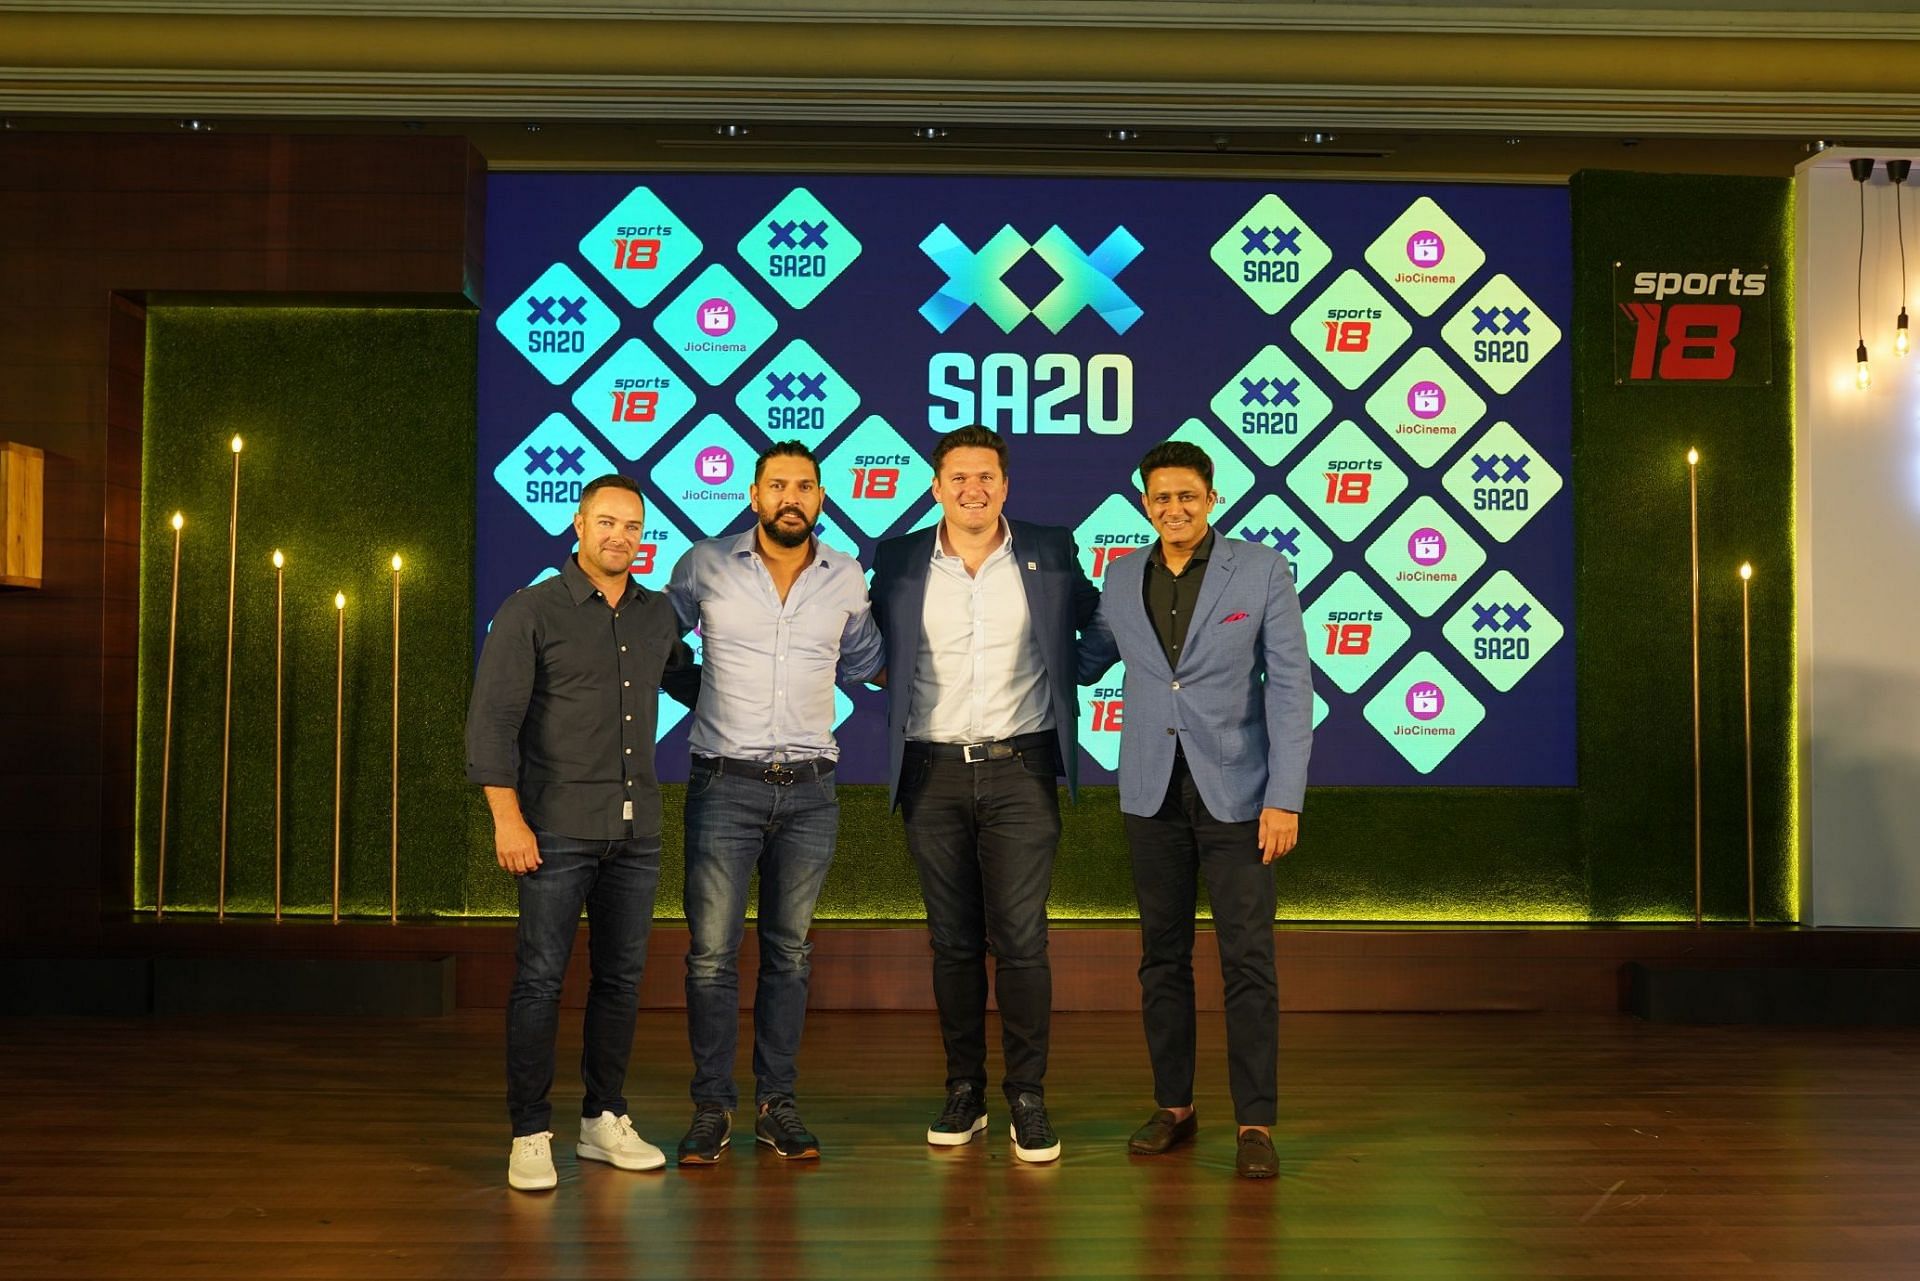 Mark Boucher, Yuvraj Singh, Graeme Smith and Anil Kumble at the SA20 Event.